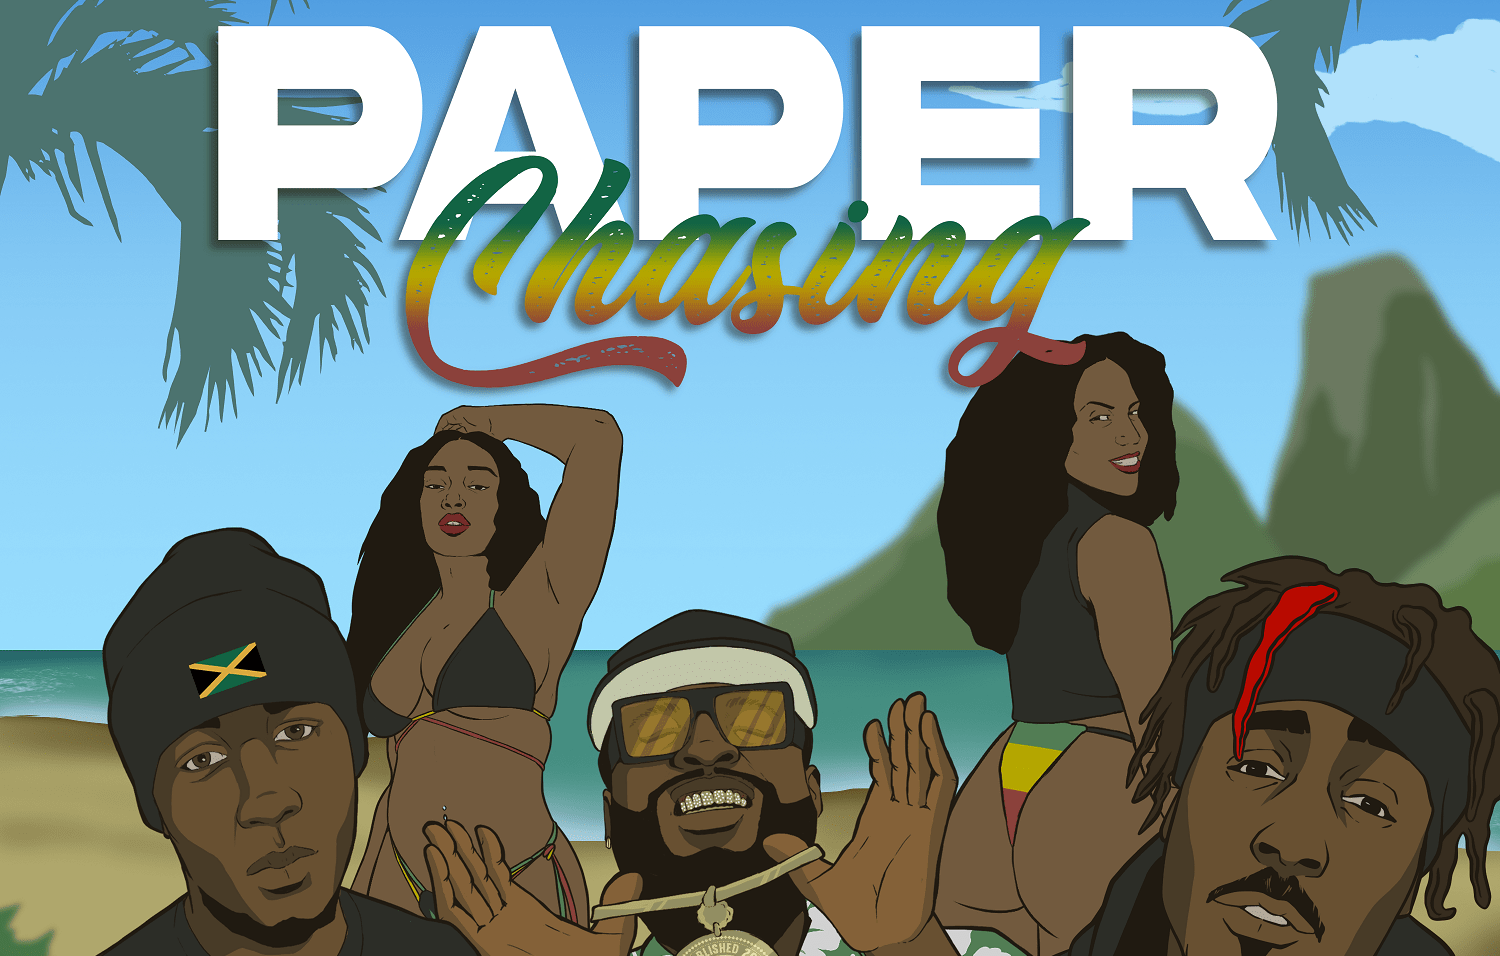 Sirr Jones To Release AfroBeats Single "Paper Chasing" ft. Darren Eugene & Pablo Productions